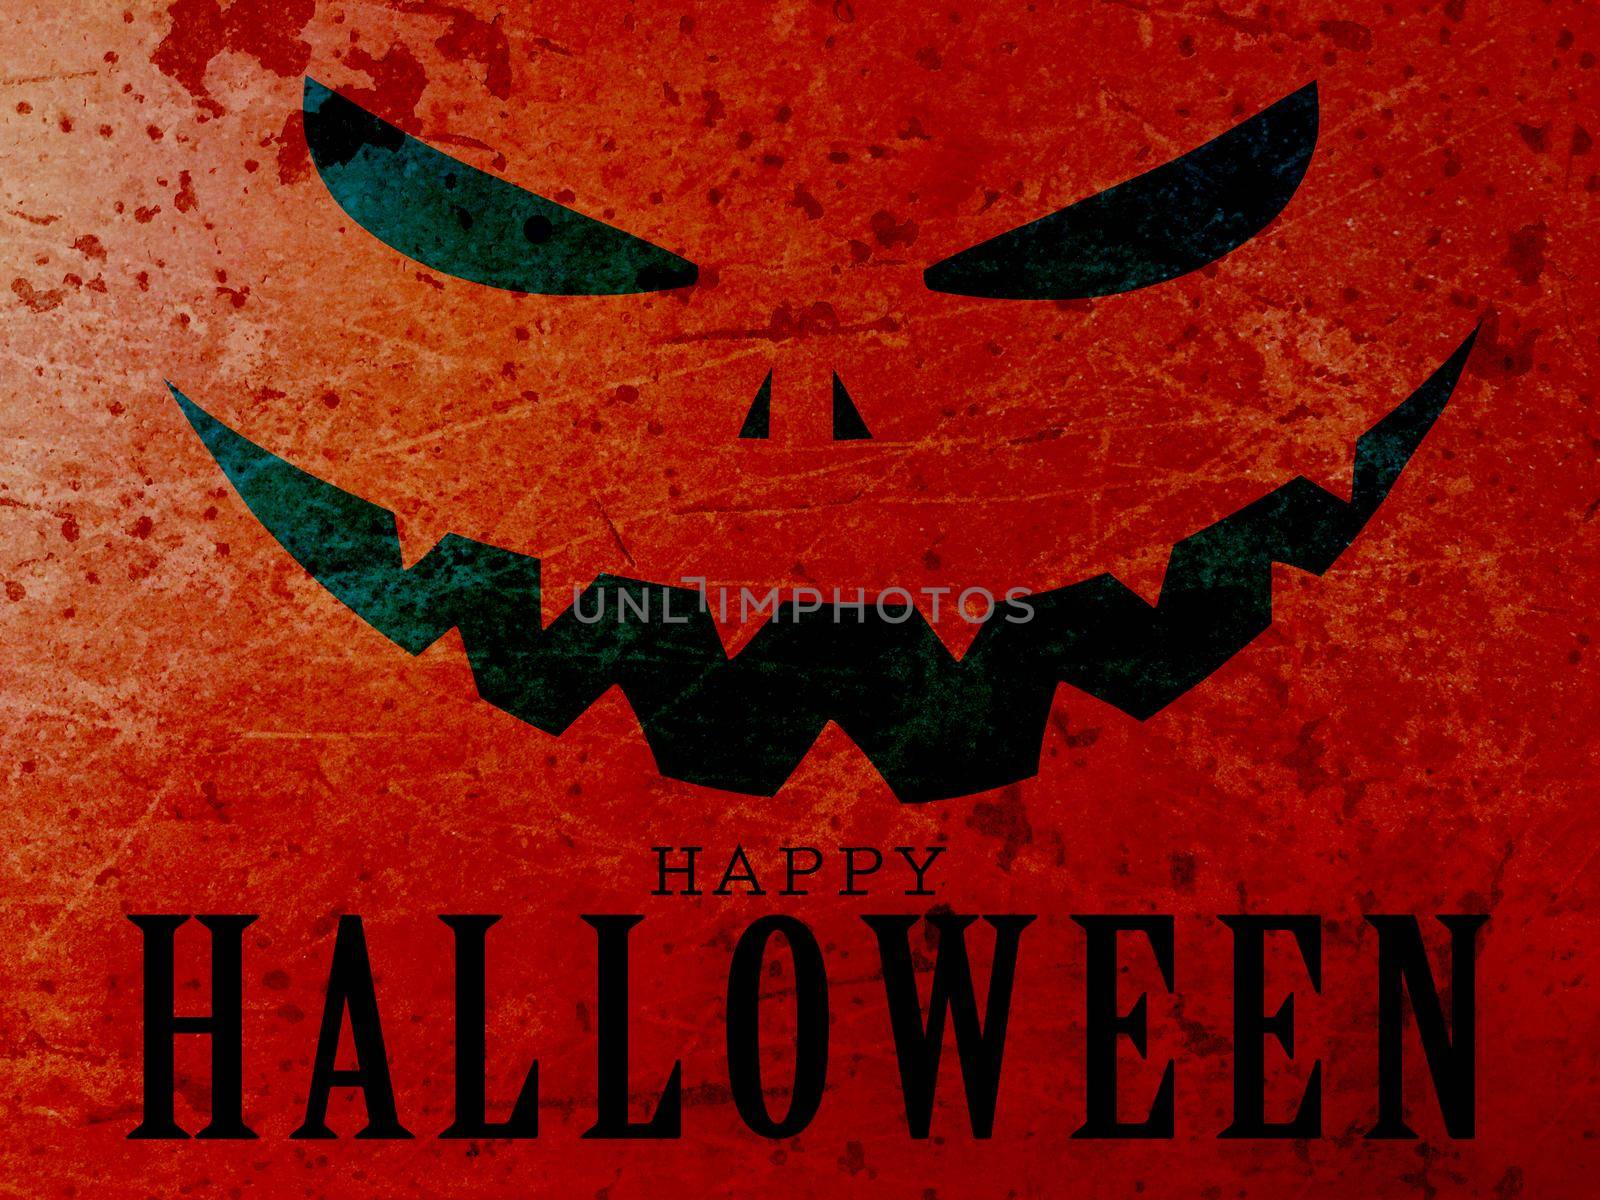 Happy Halloween monster face background illustration